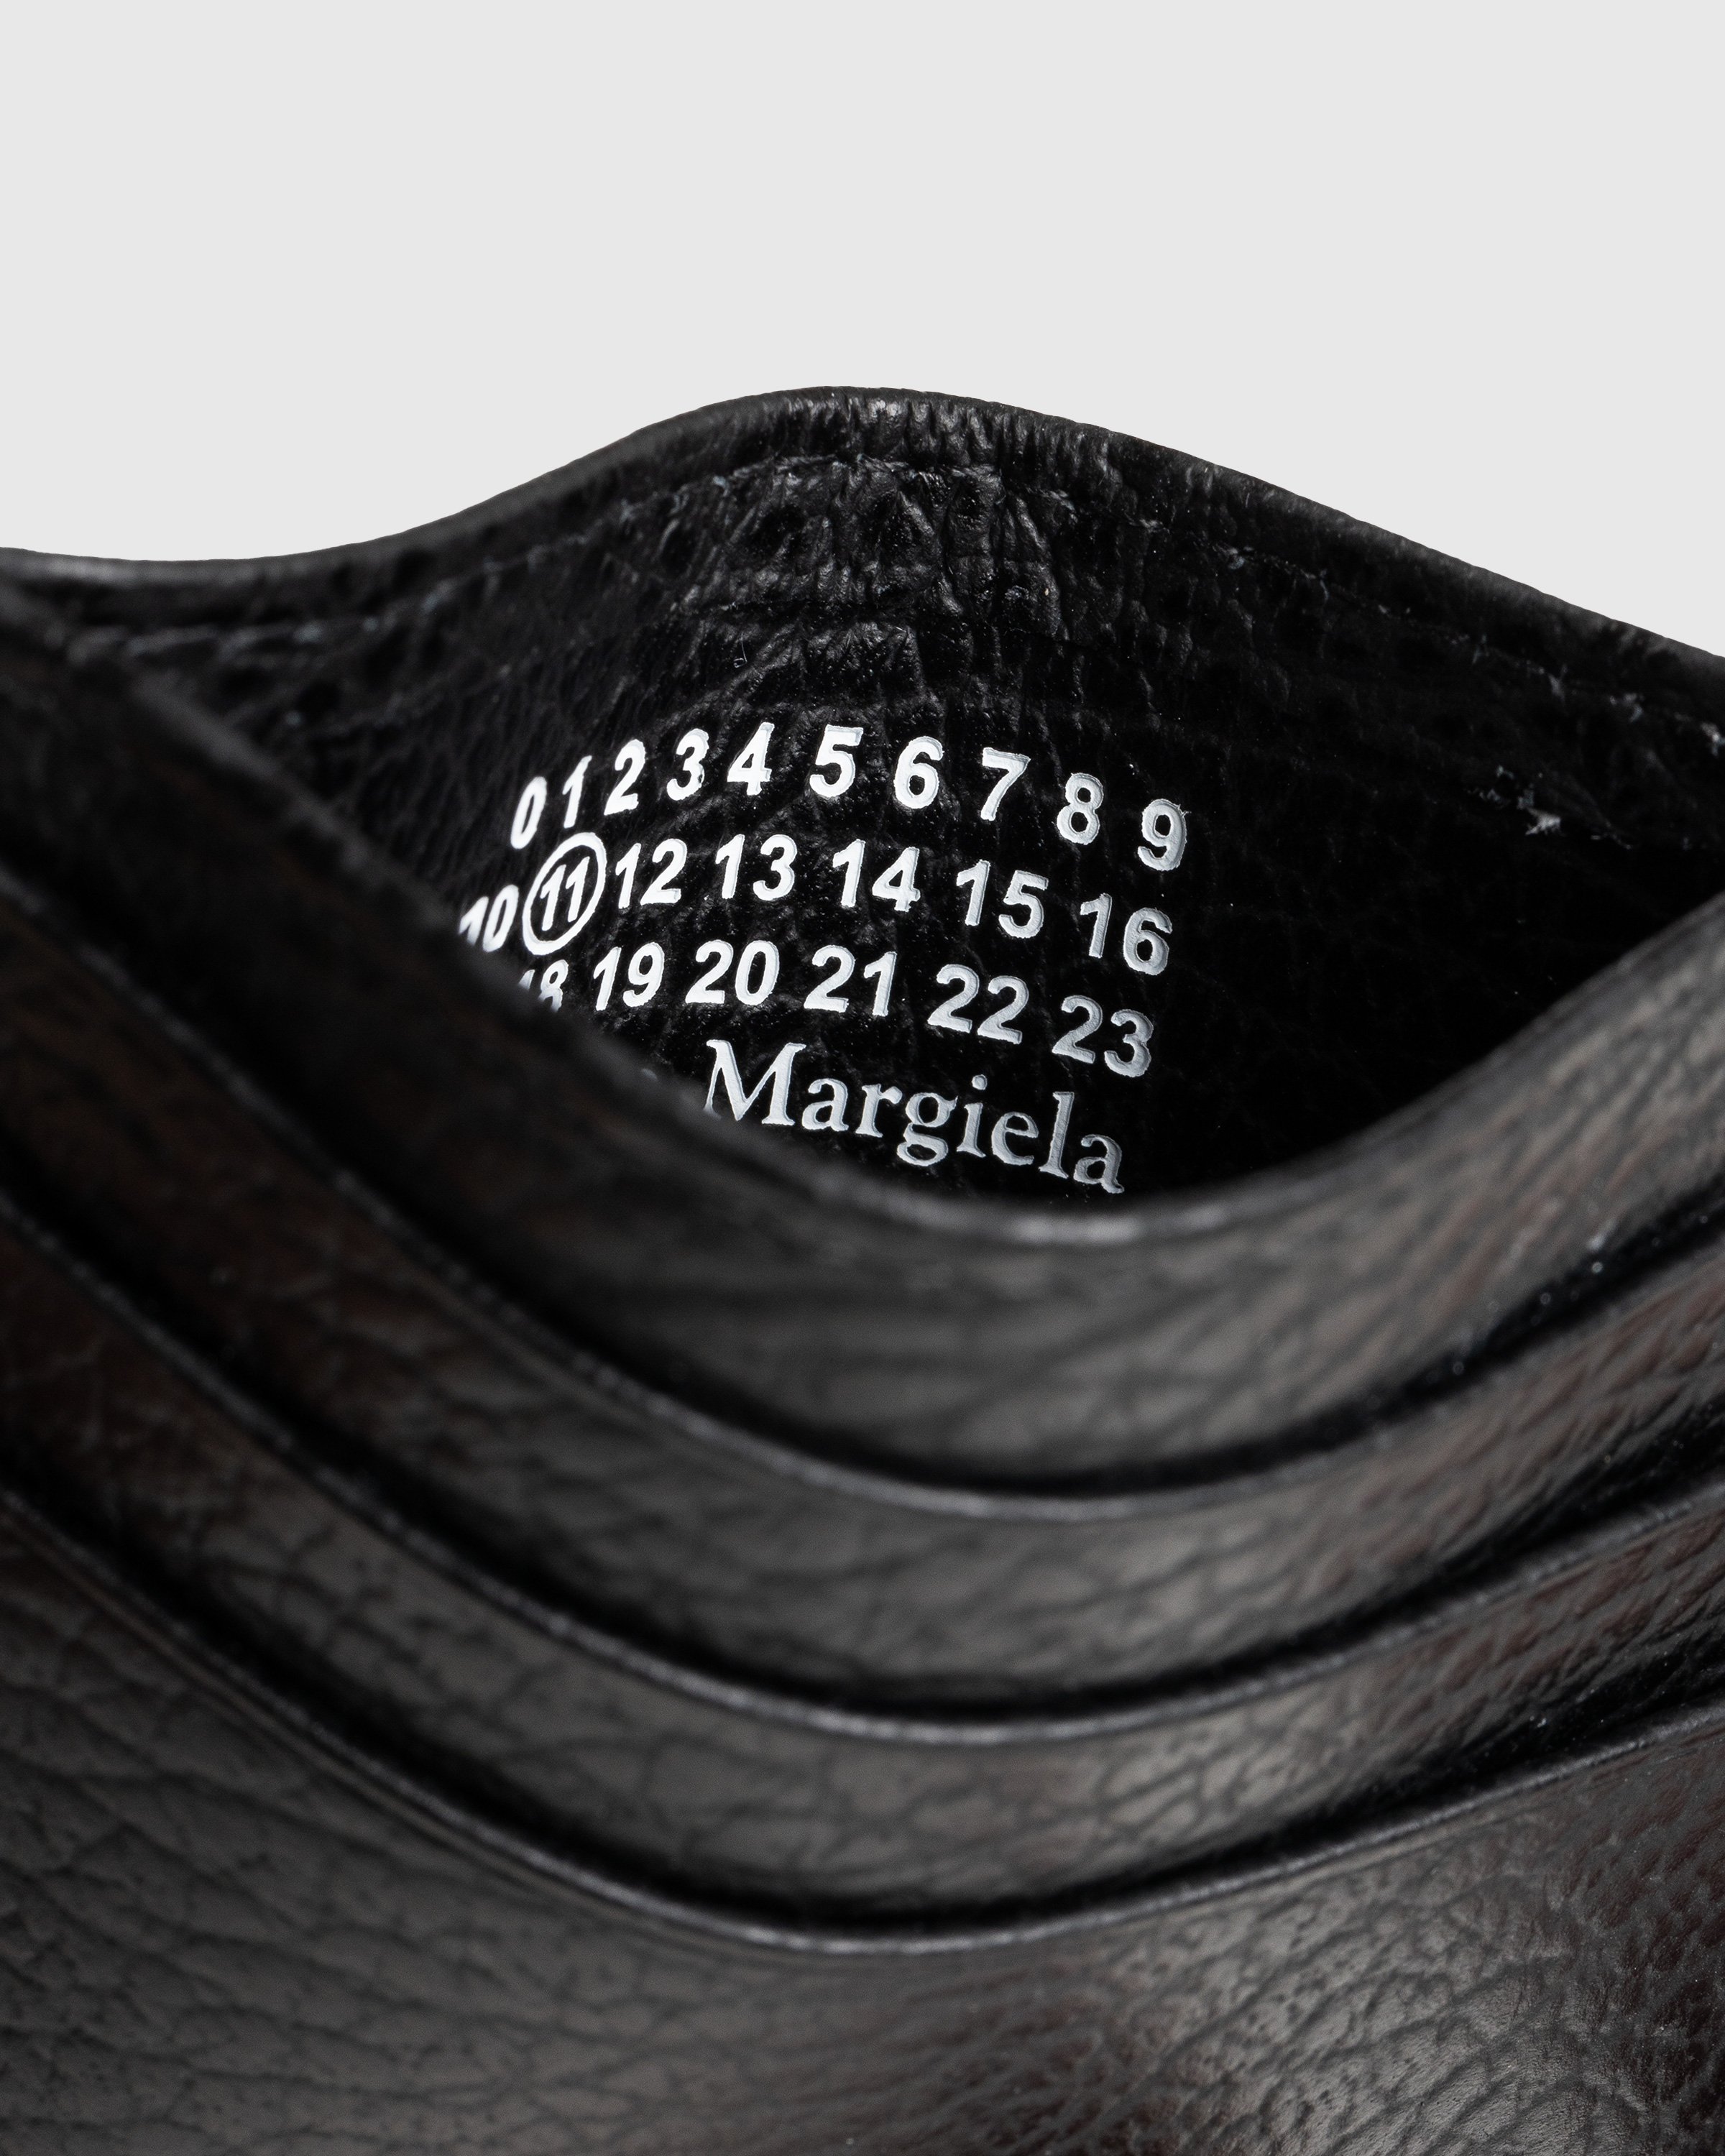 Maison Margiela - Leather Cardholder Black - Accessories - Black - Image 4